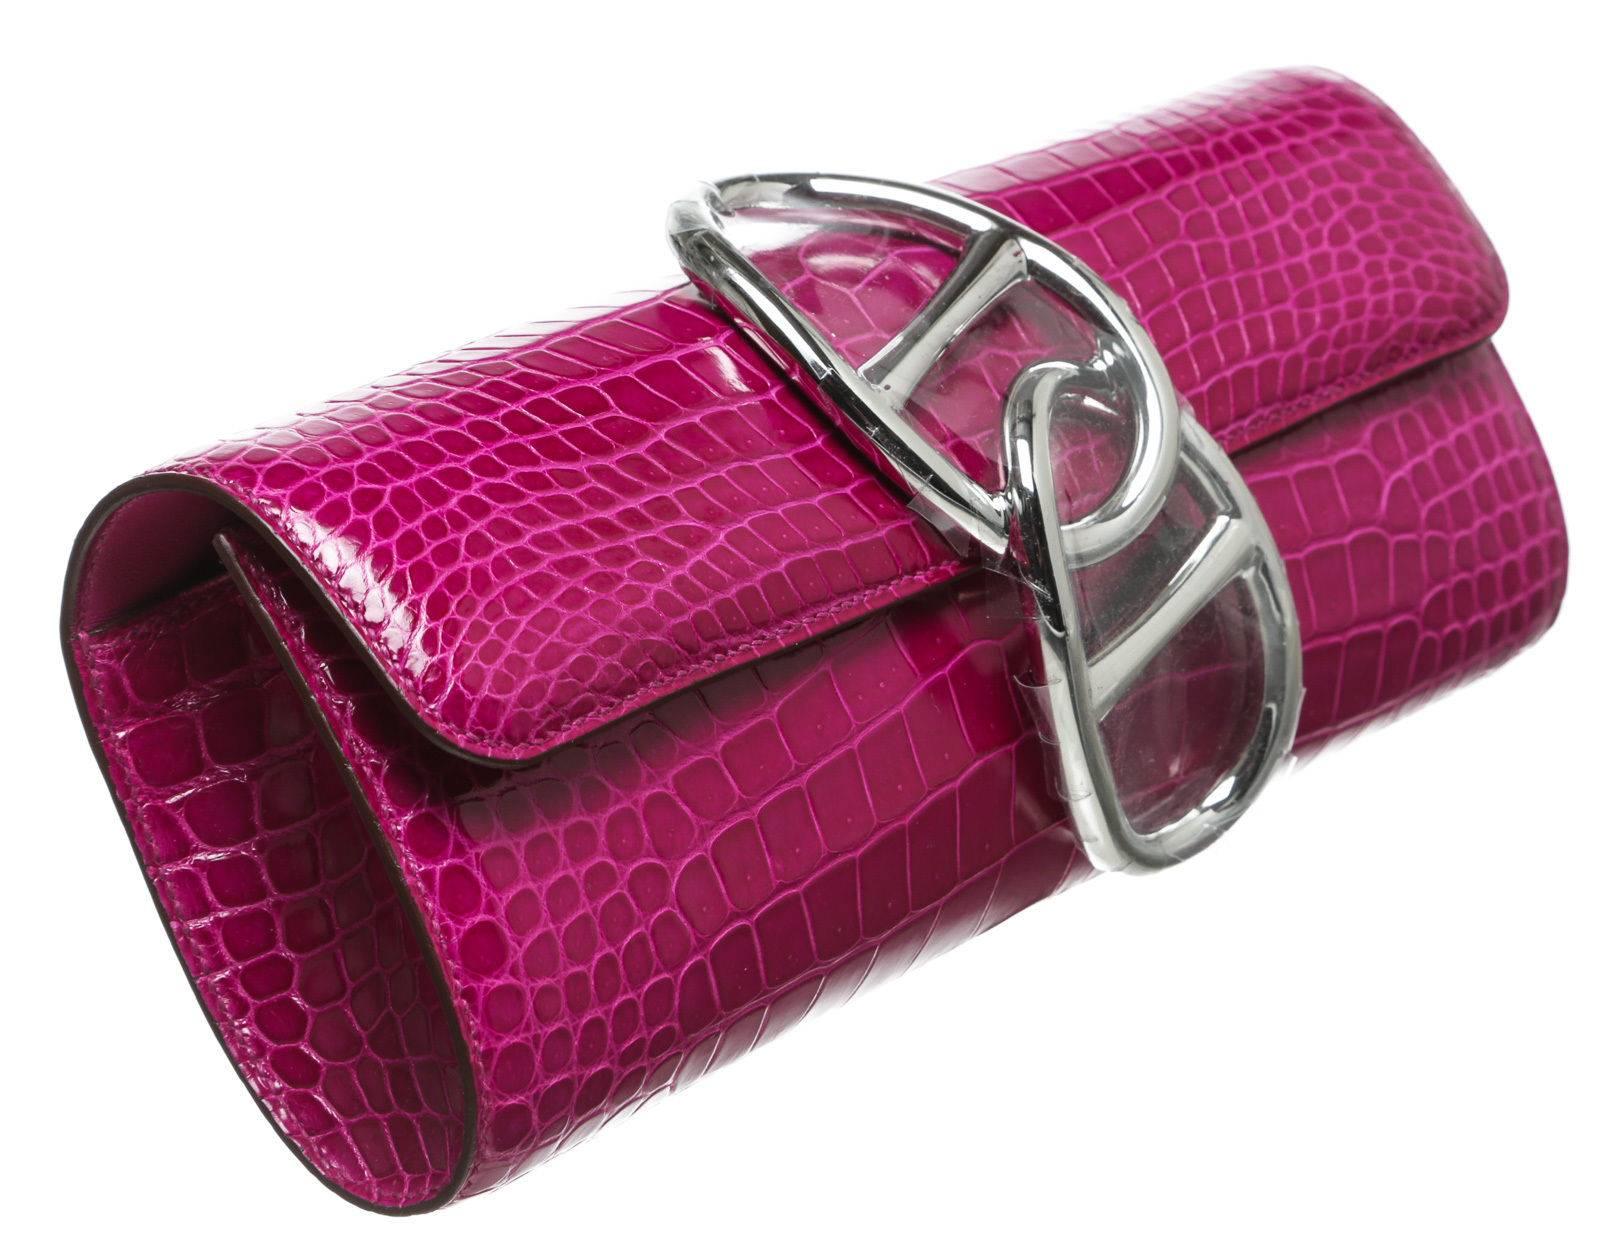 Designer: Hermes
Type: Handbag
Condition: NEW
Color: Pink
Material: Crocodile
Dimensions: 9